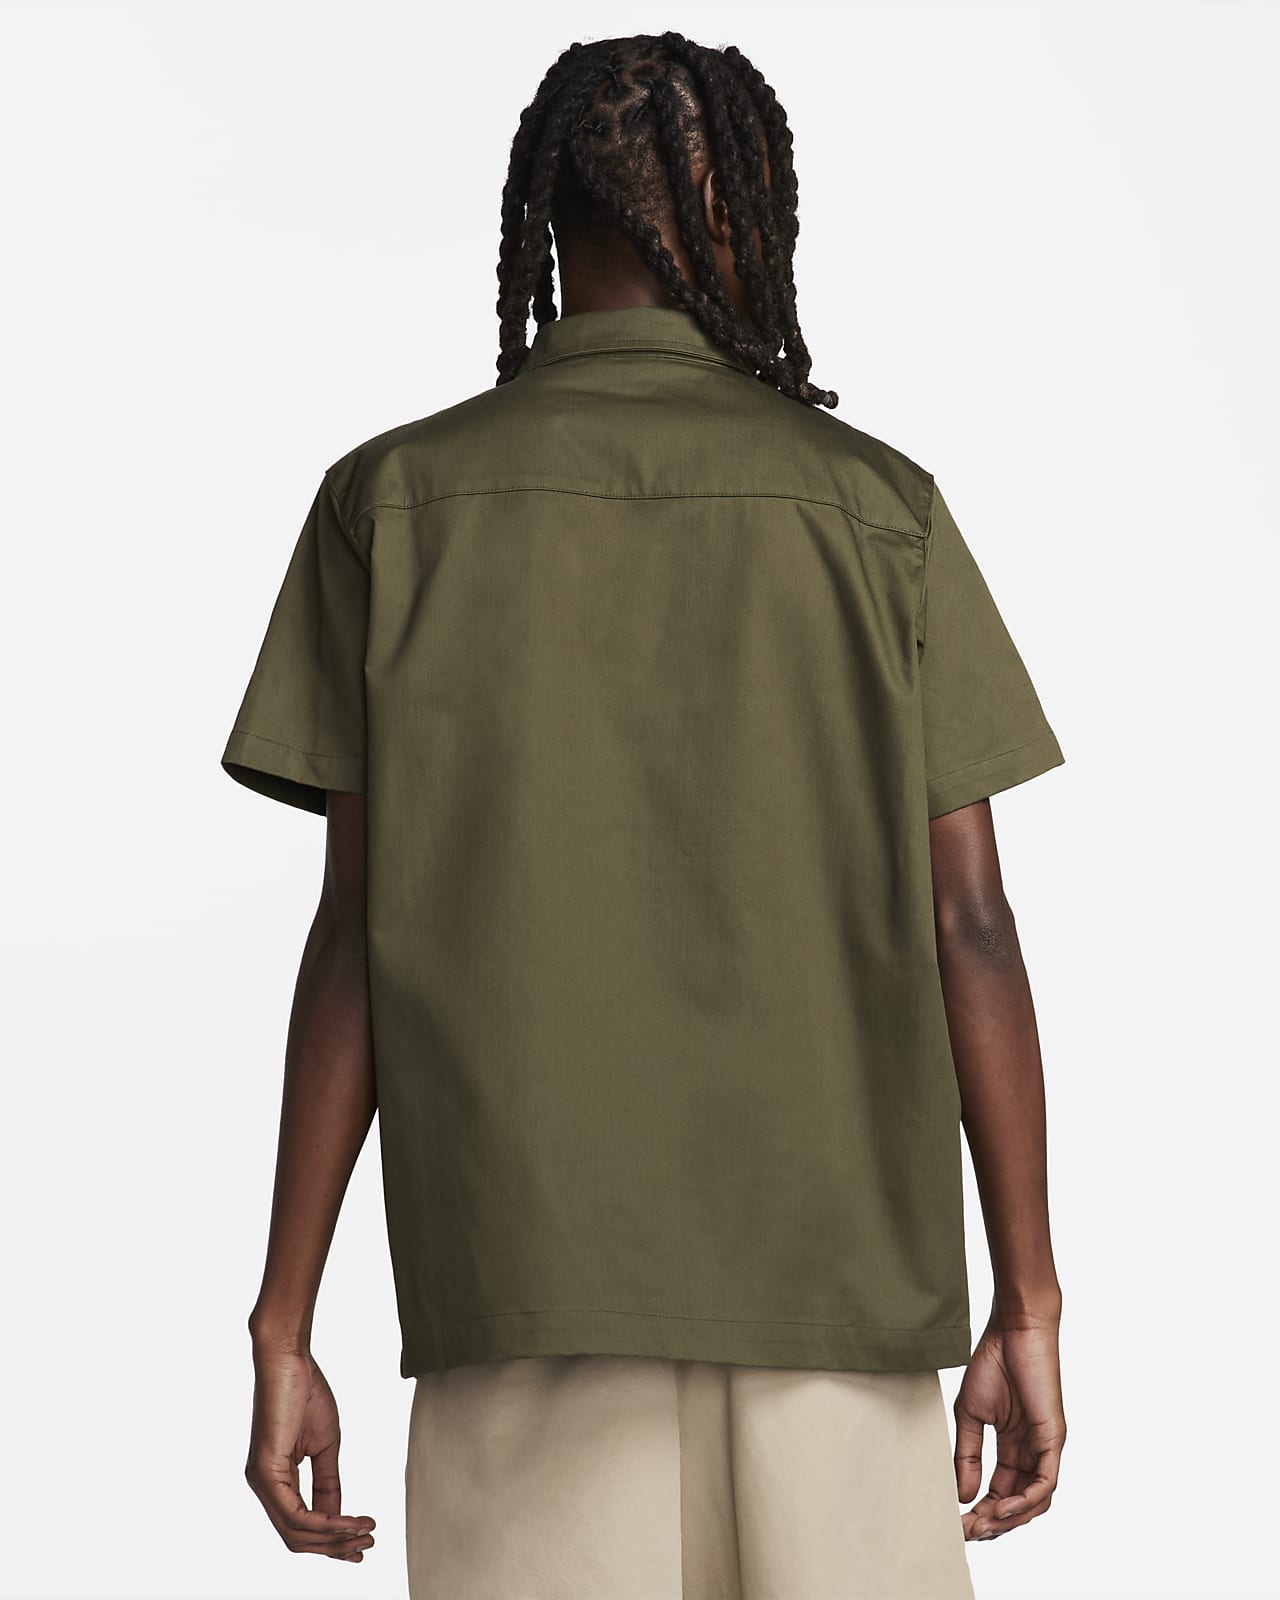 Nike Men's Life Woven Military Short-Sleeve Button-Down Shirt